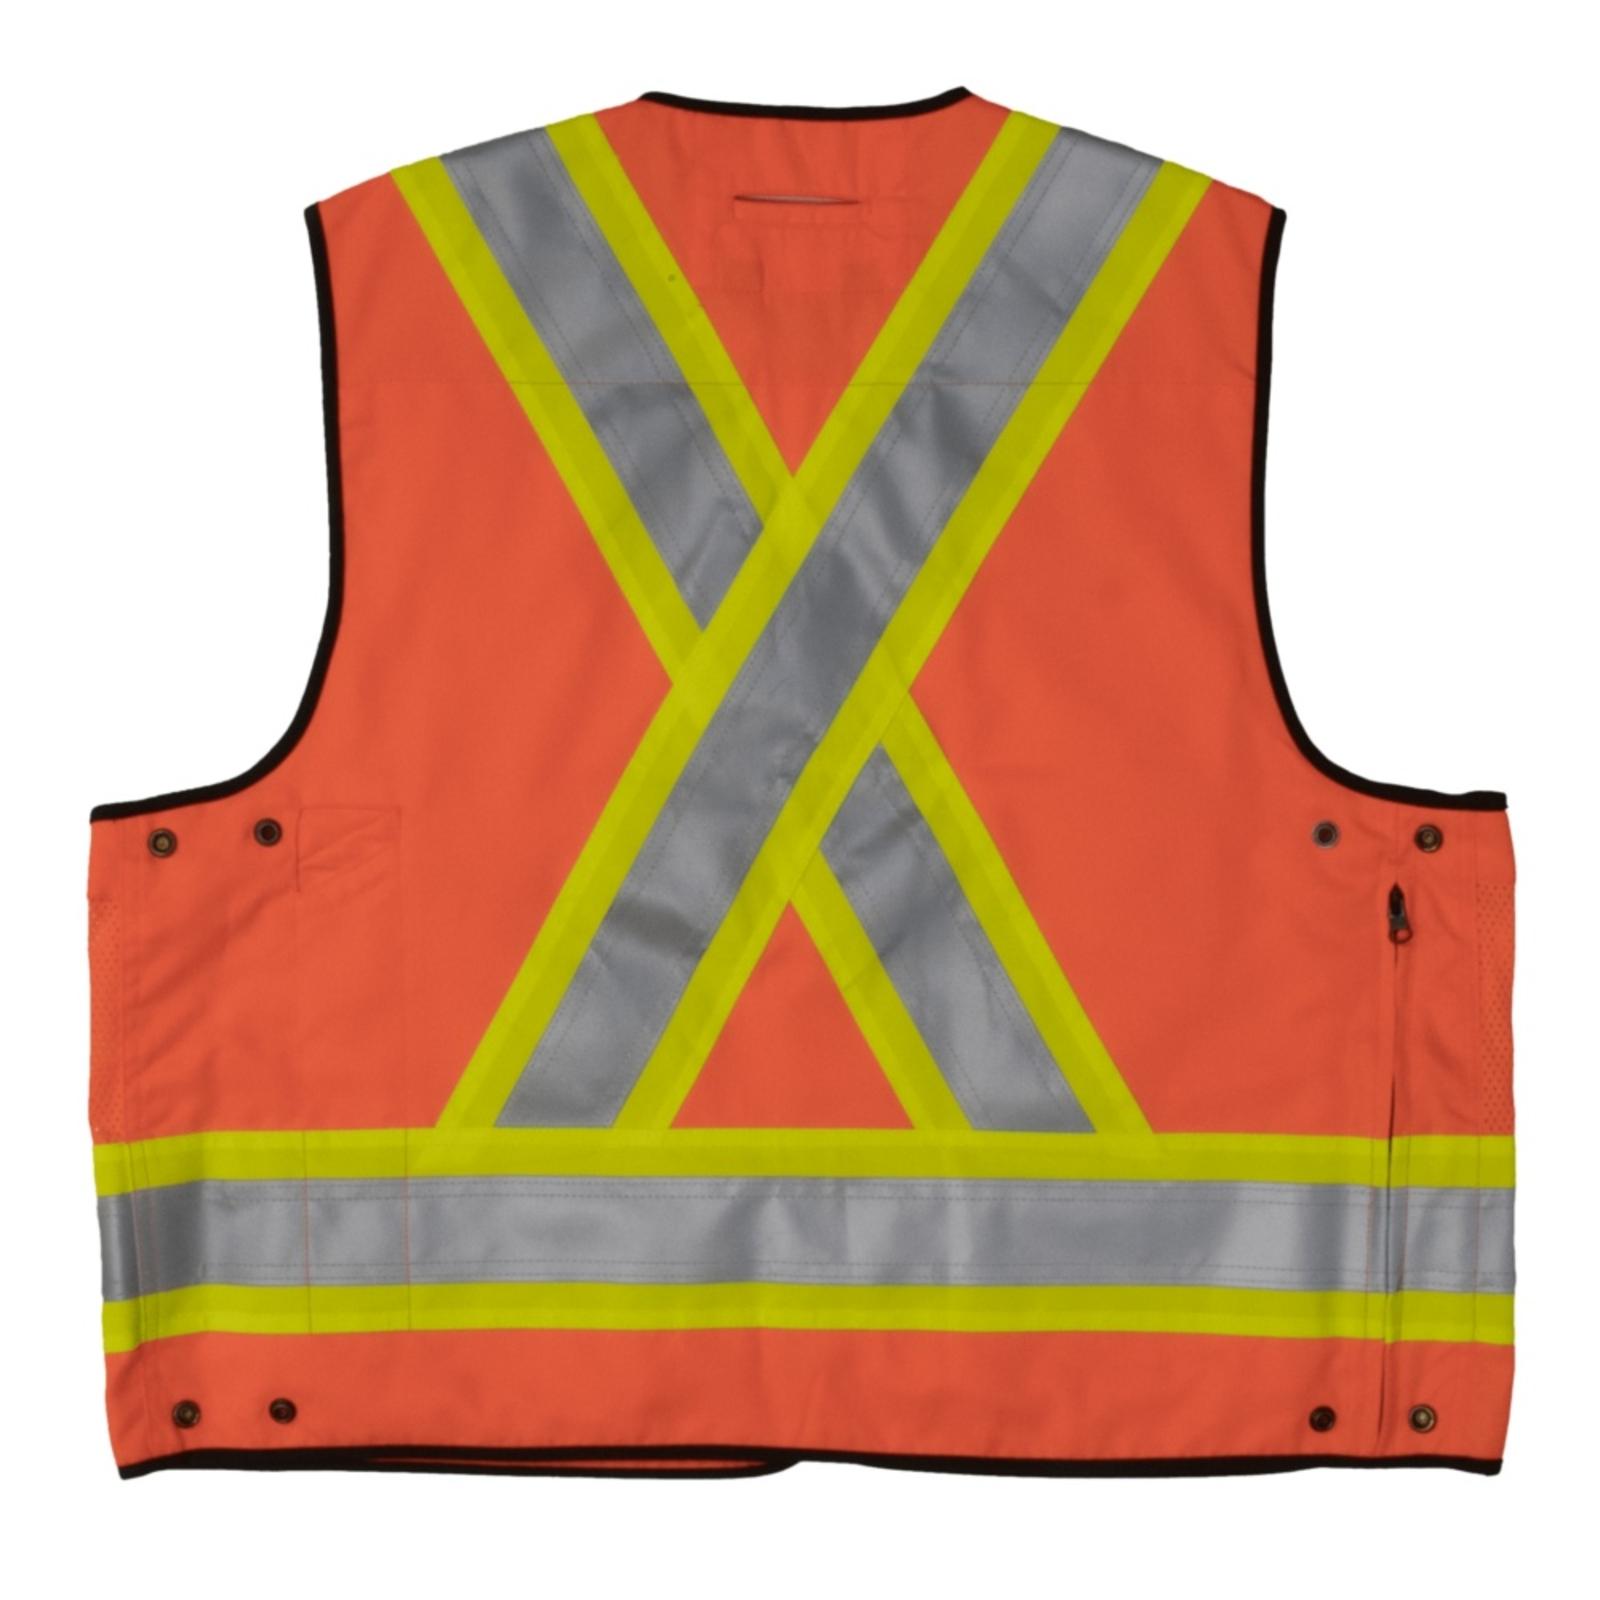 Tough Duck Surveyor Safety Vest